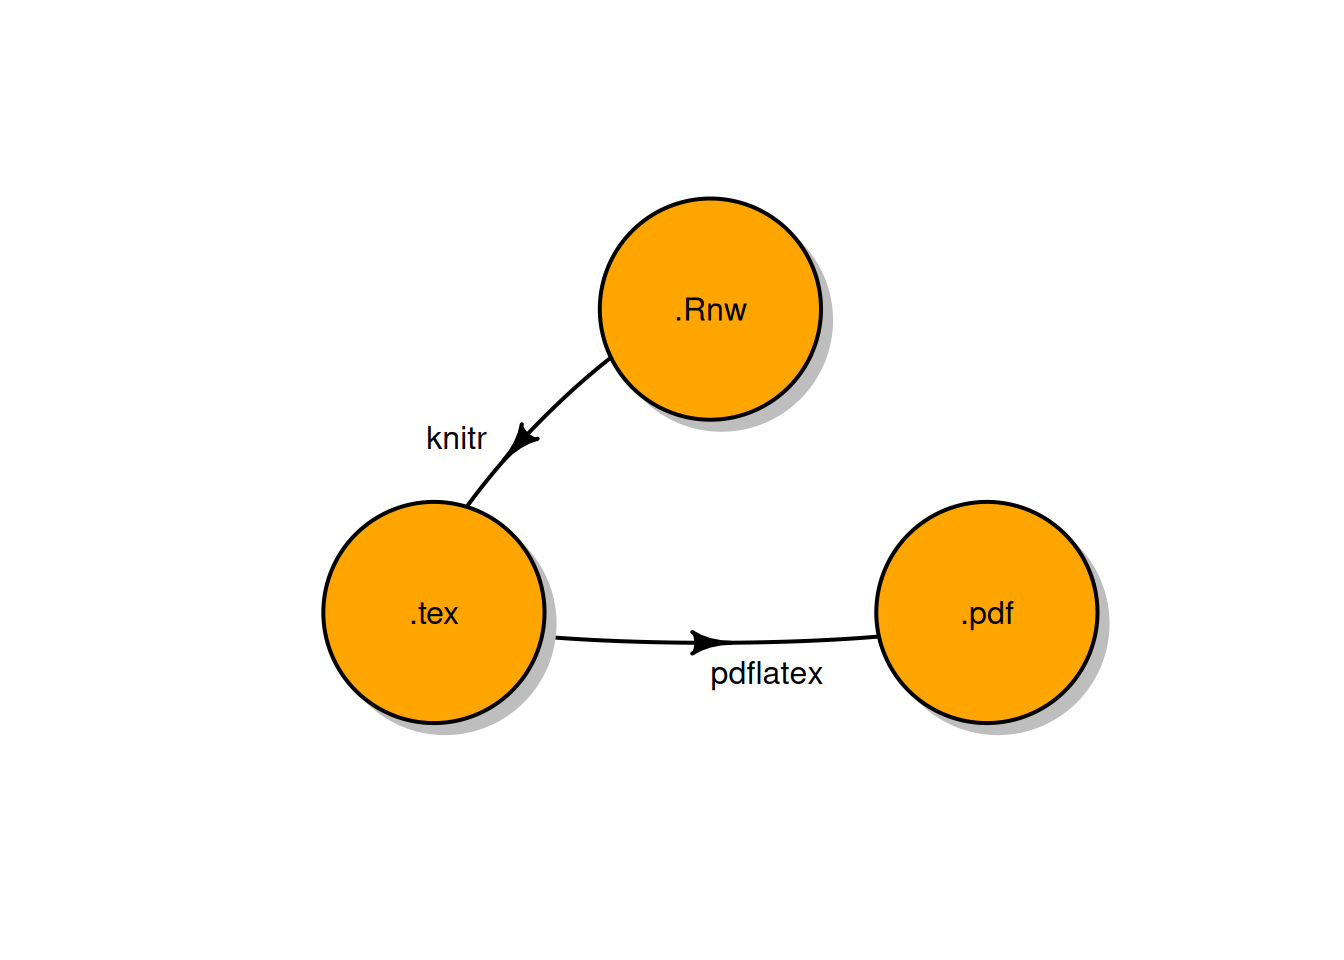 The knitr process to generate a pdf.